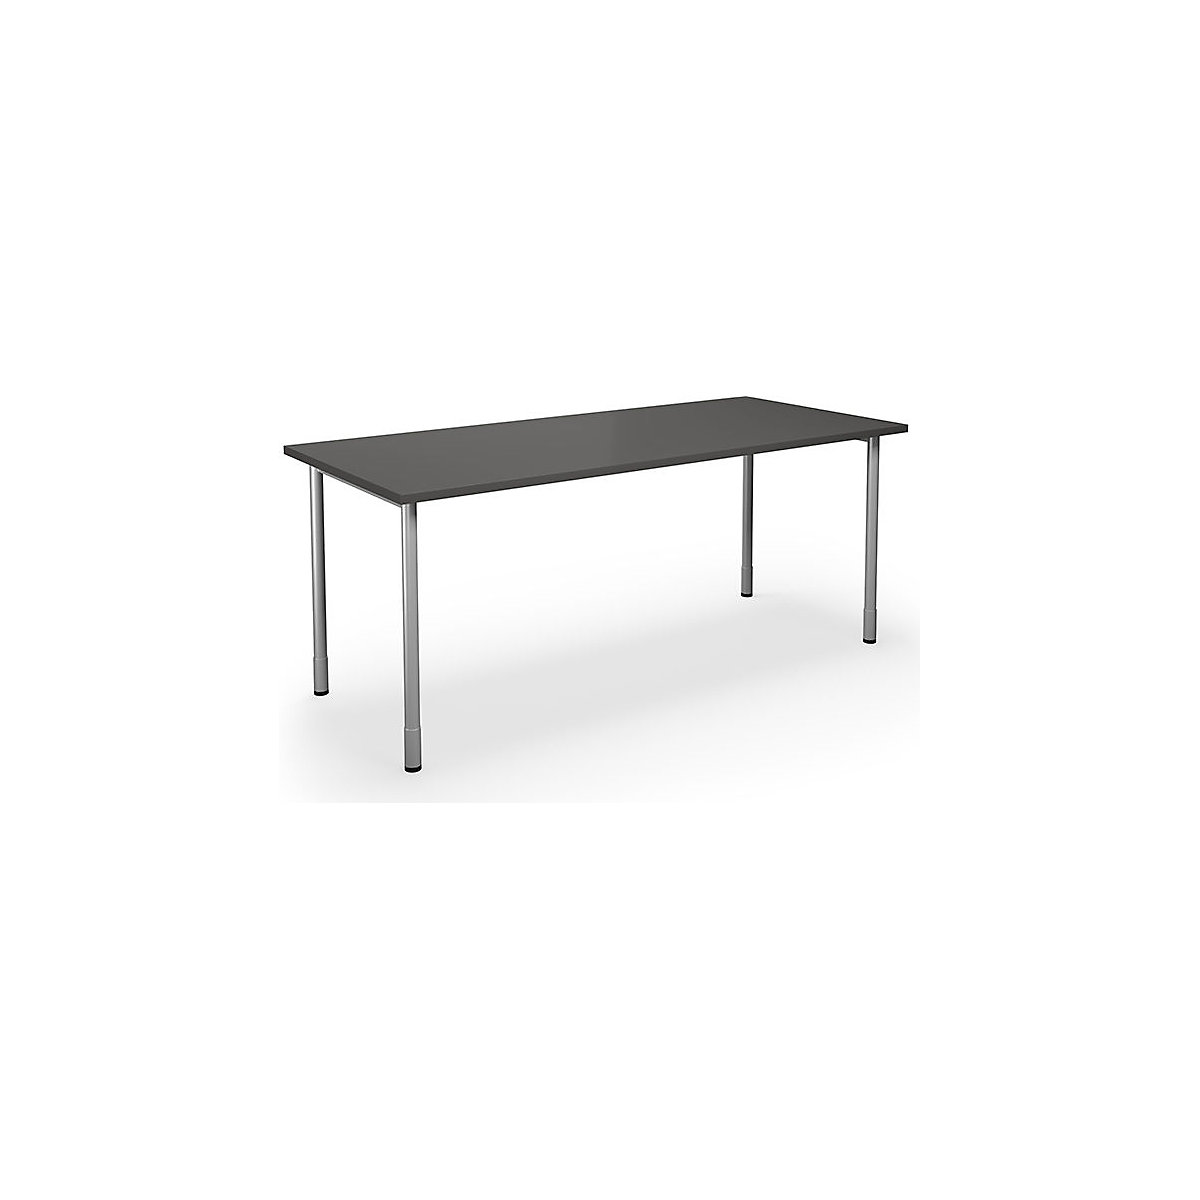 DUO-C multi-purpose desk, straight tabletop, WxD 1800 x 800 mm, dark grey, silver-14